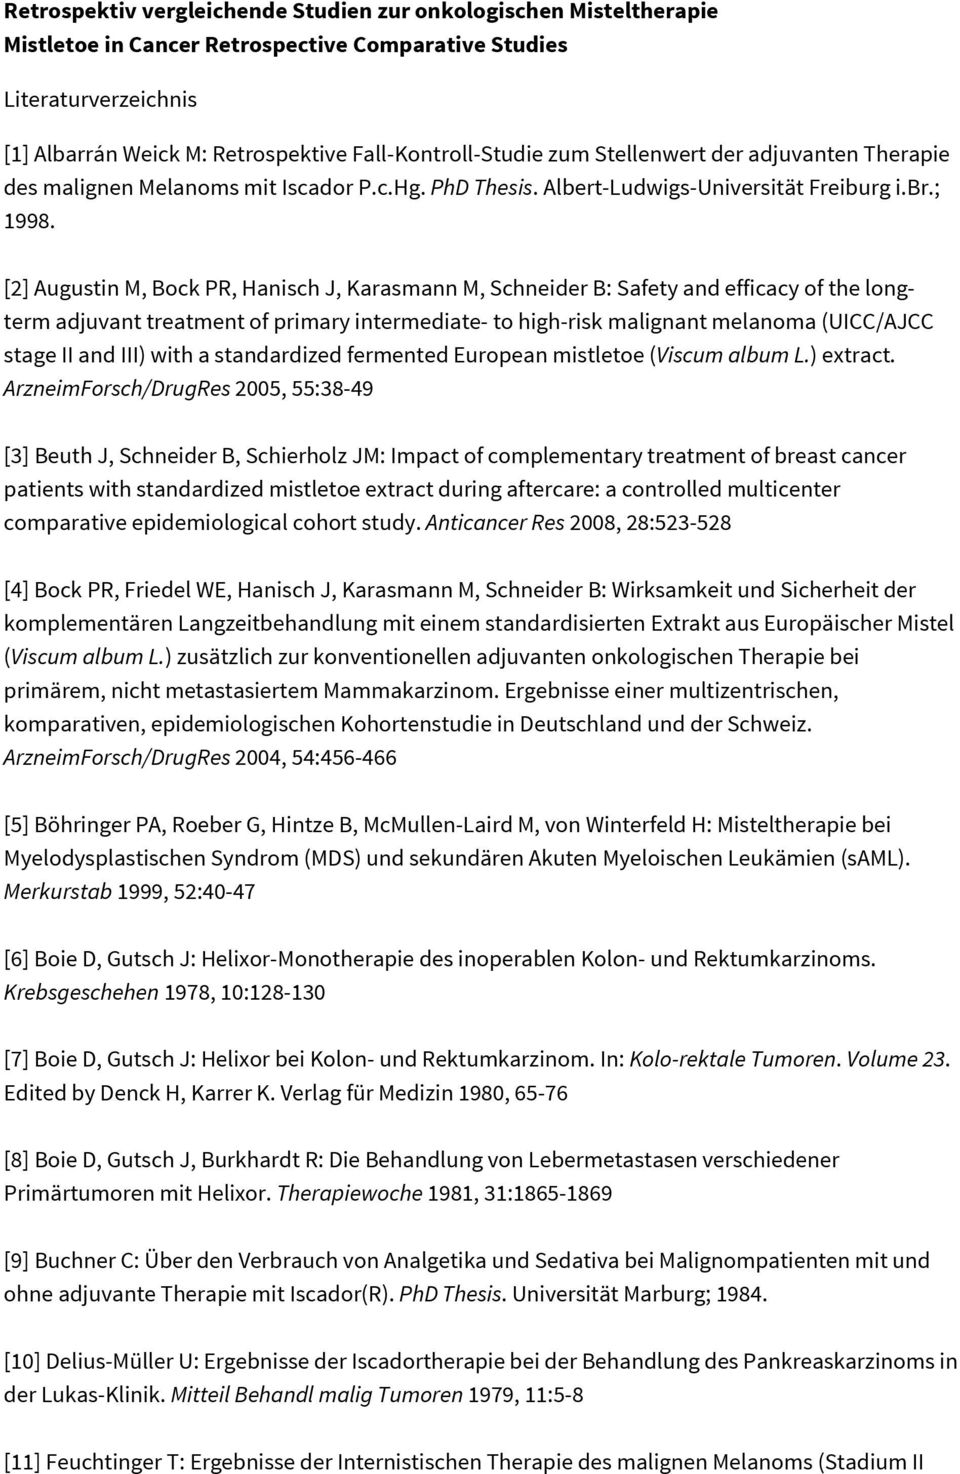 [2] Augustin M, Bock PR, Hanisch J, Karasmann M, Schneider B: Safety and efficacy of the longterm adjuvant treatment of primary intermediate- to high-risk malignant melanoma (UICC/AJCC stage II and